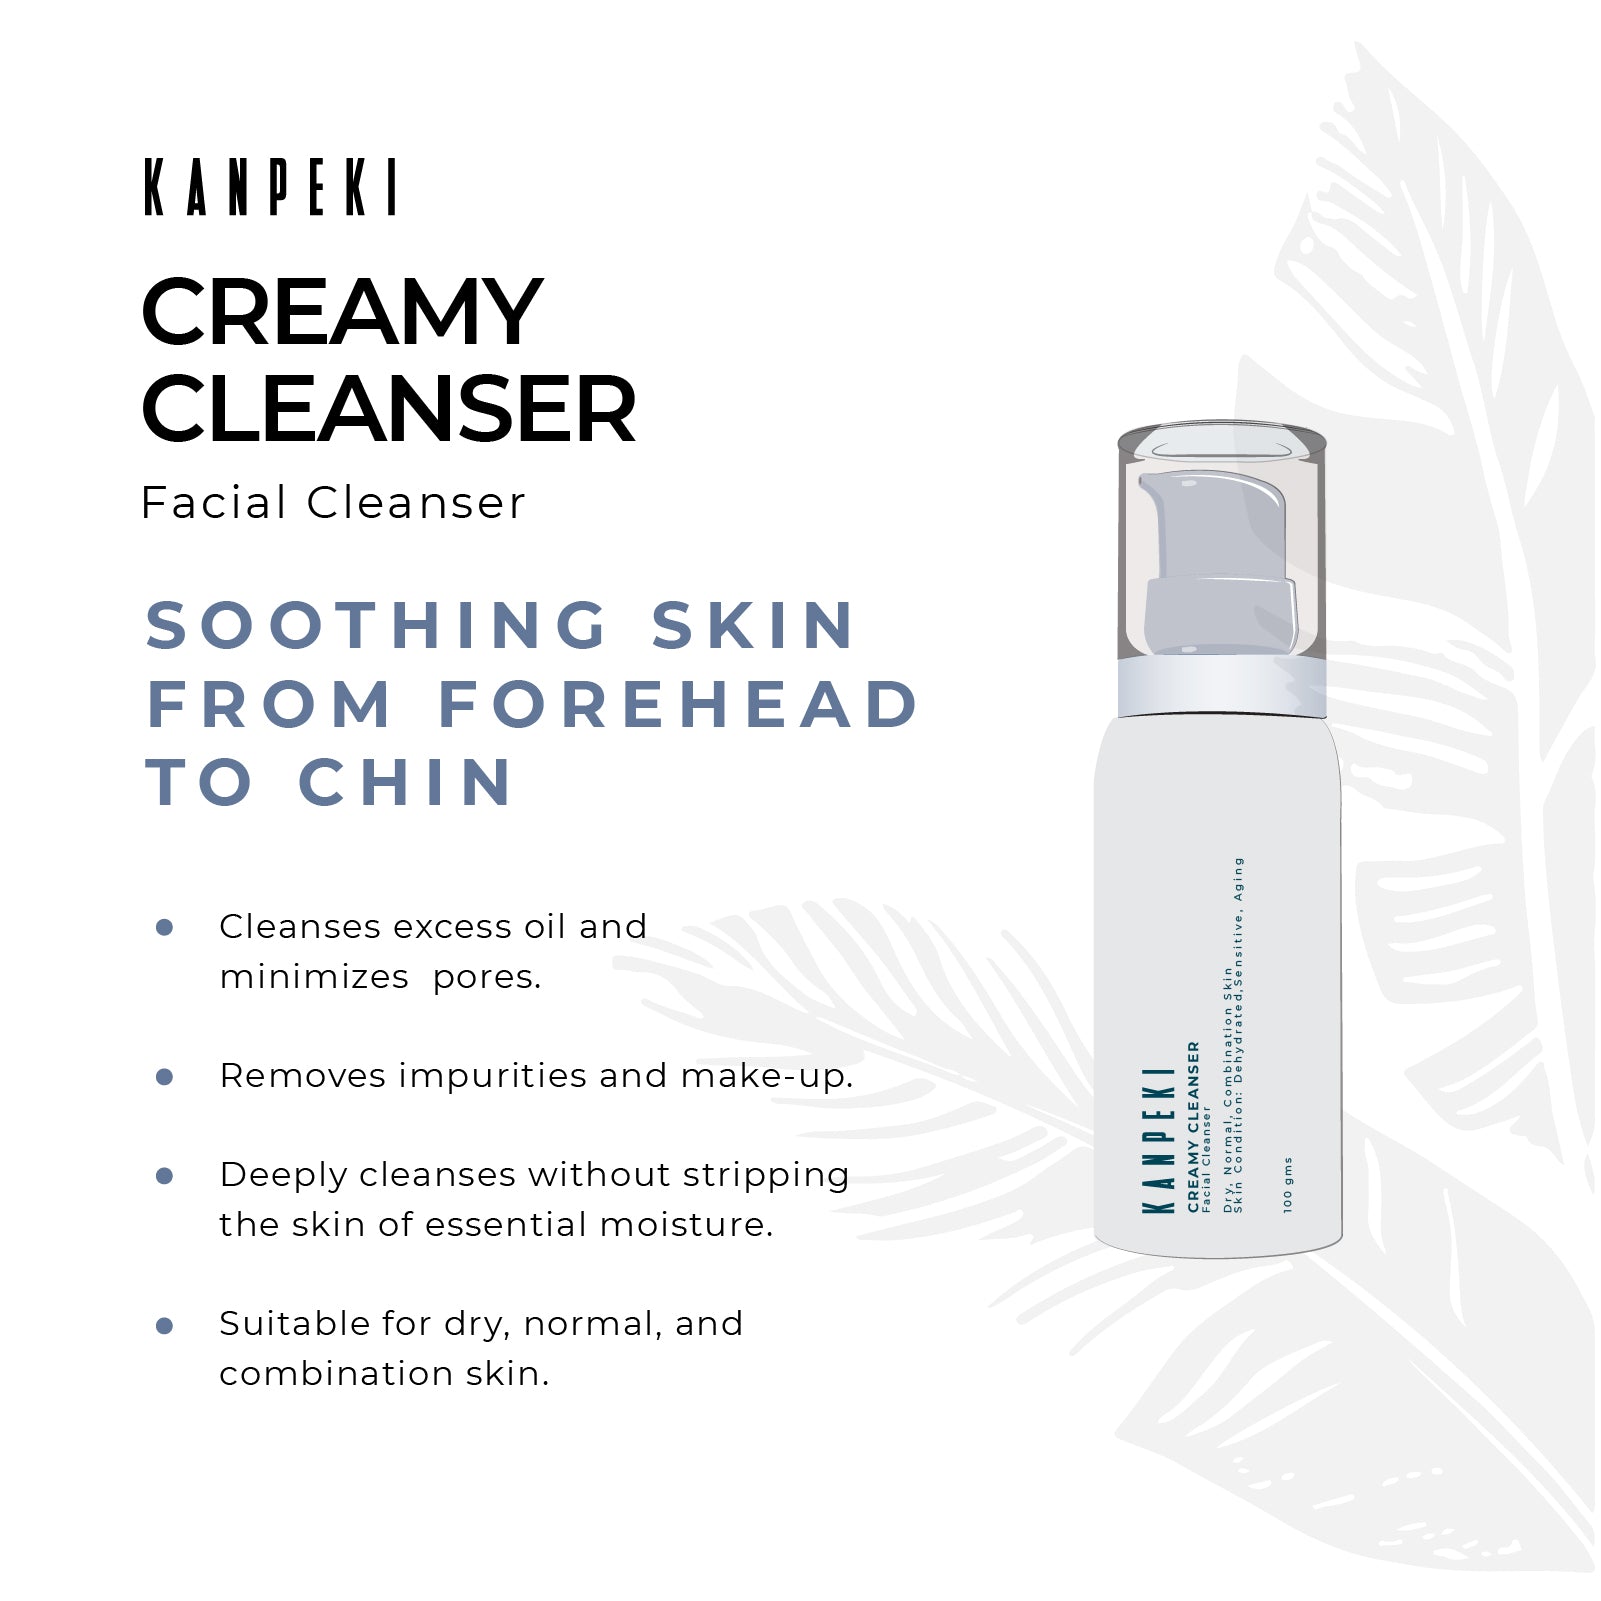 Creamy Cleanser - Kanpeki Skincare